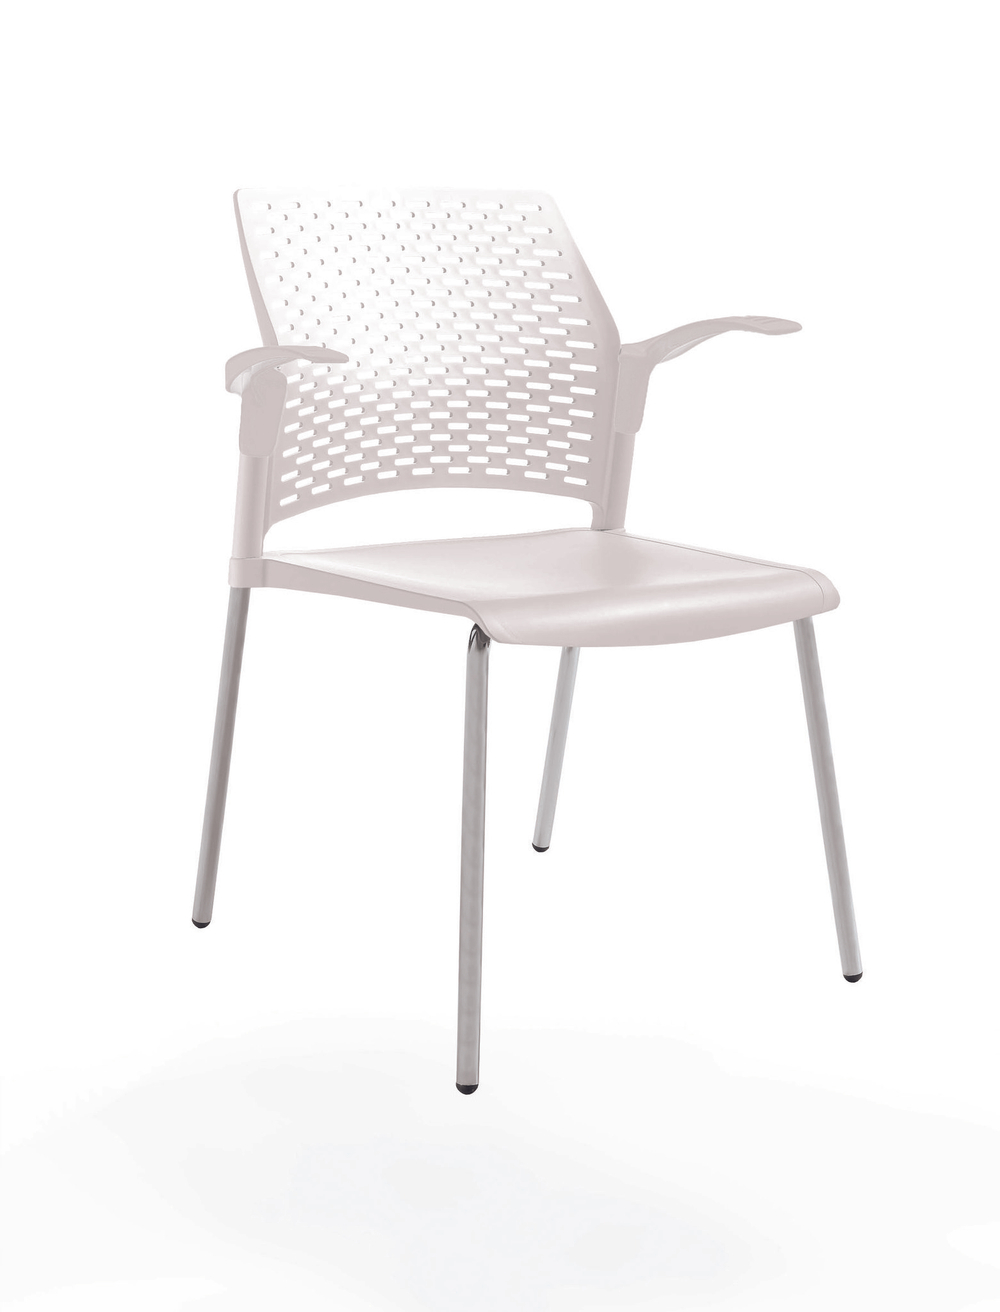 стул Rewind, каркас серый, пластик белый, с открытыми подлокотниками